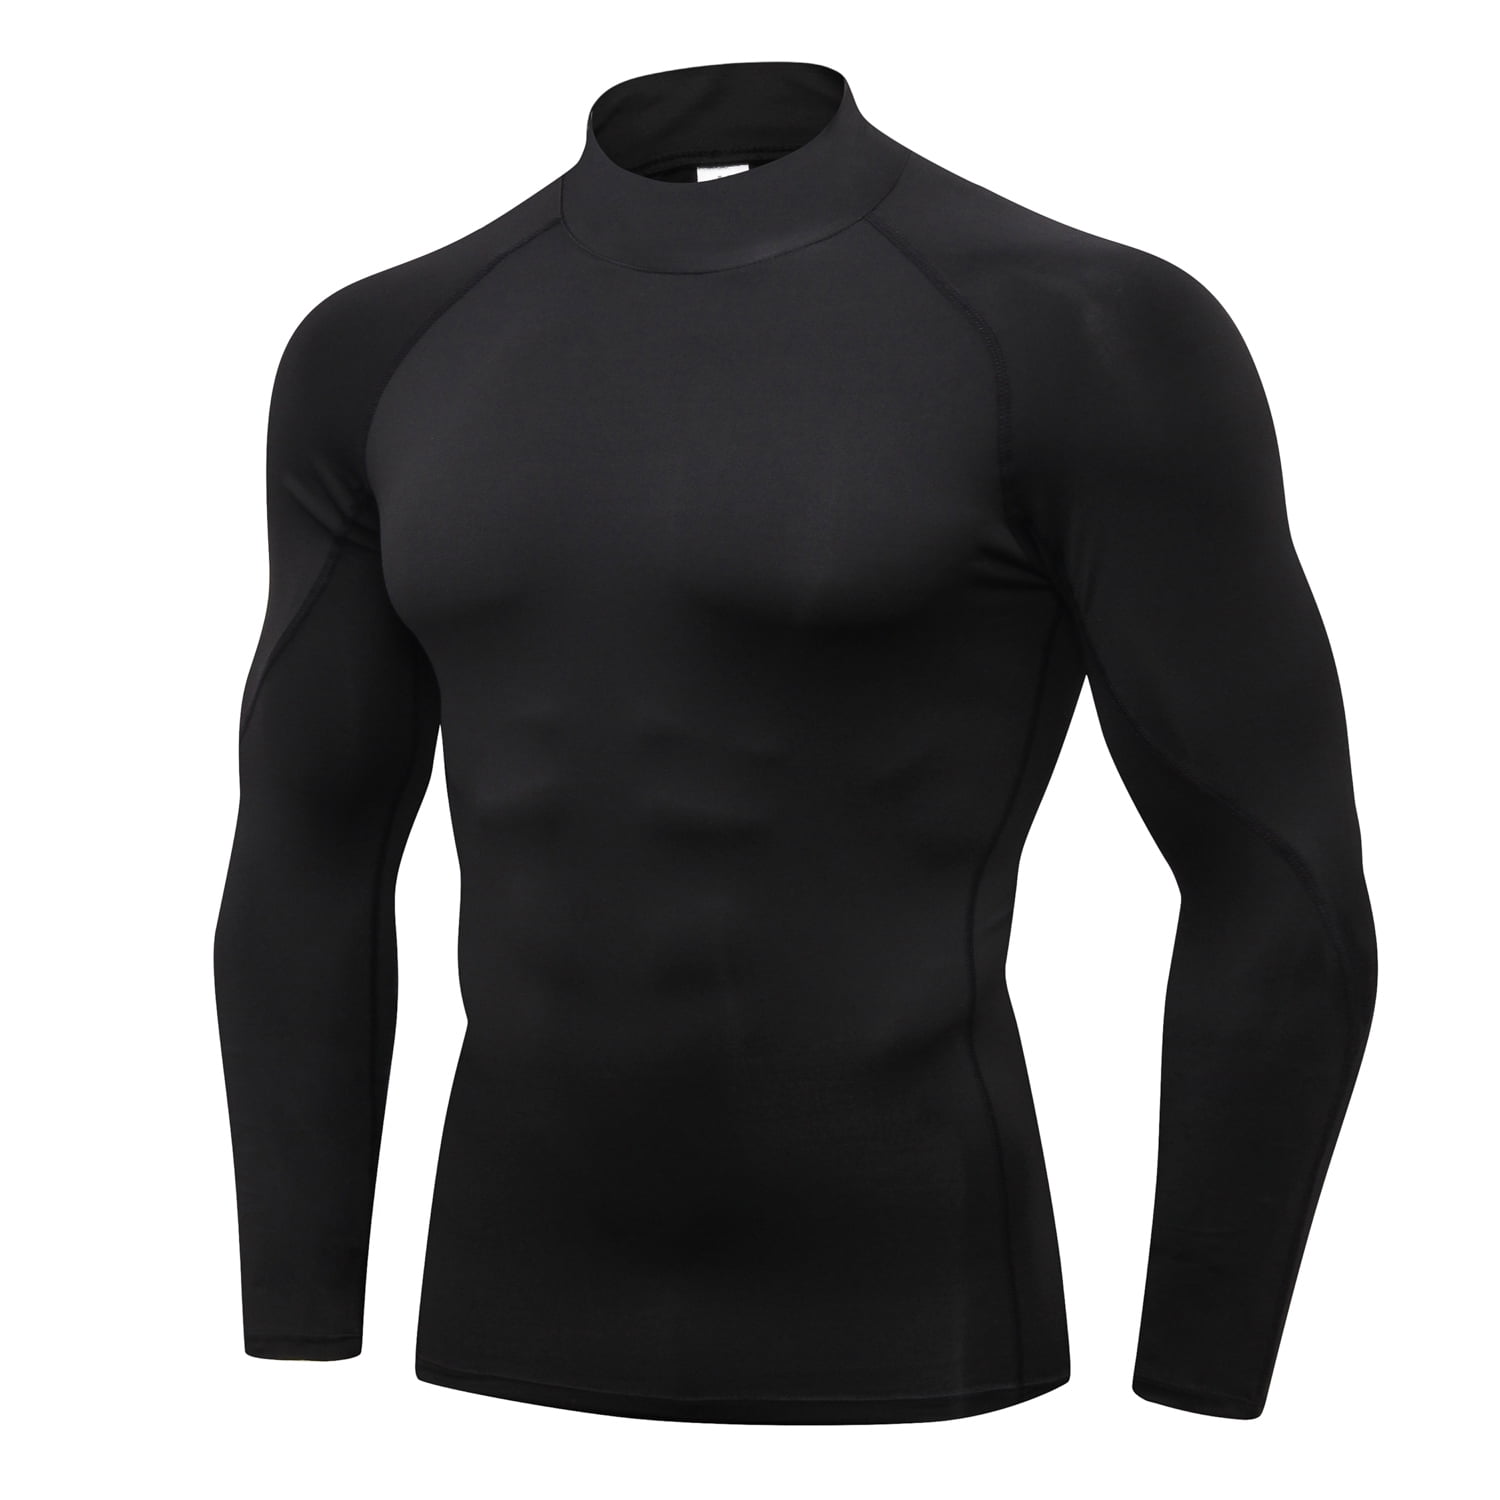 Men's Compression Shirts BaseLayer Tights Mock Long Sleeve Workout Running Tops 